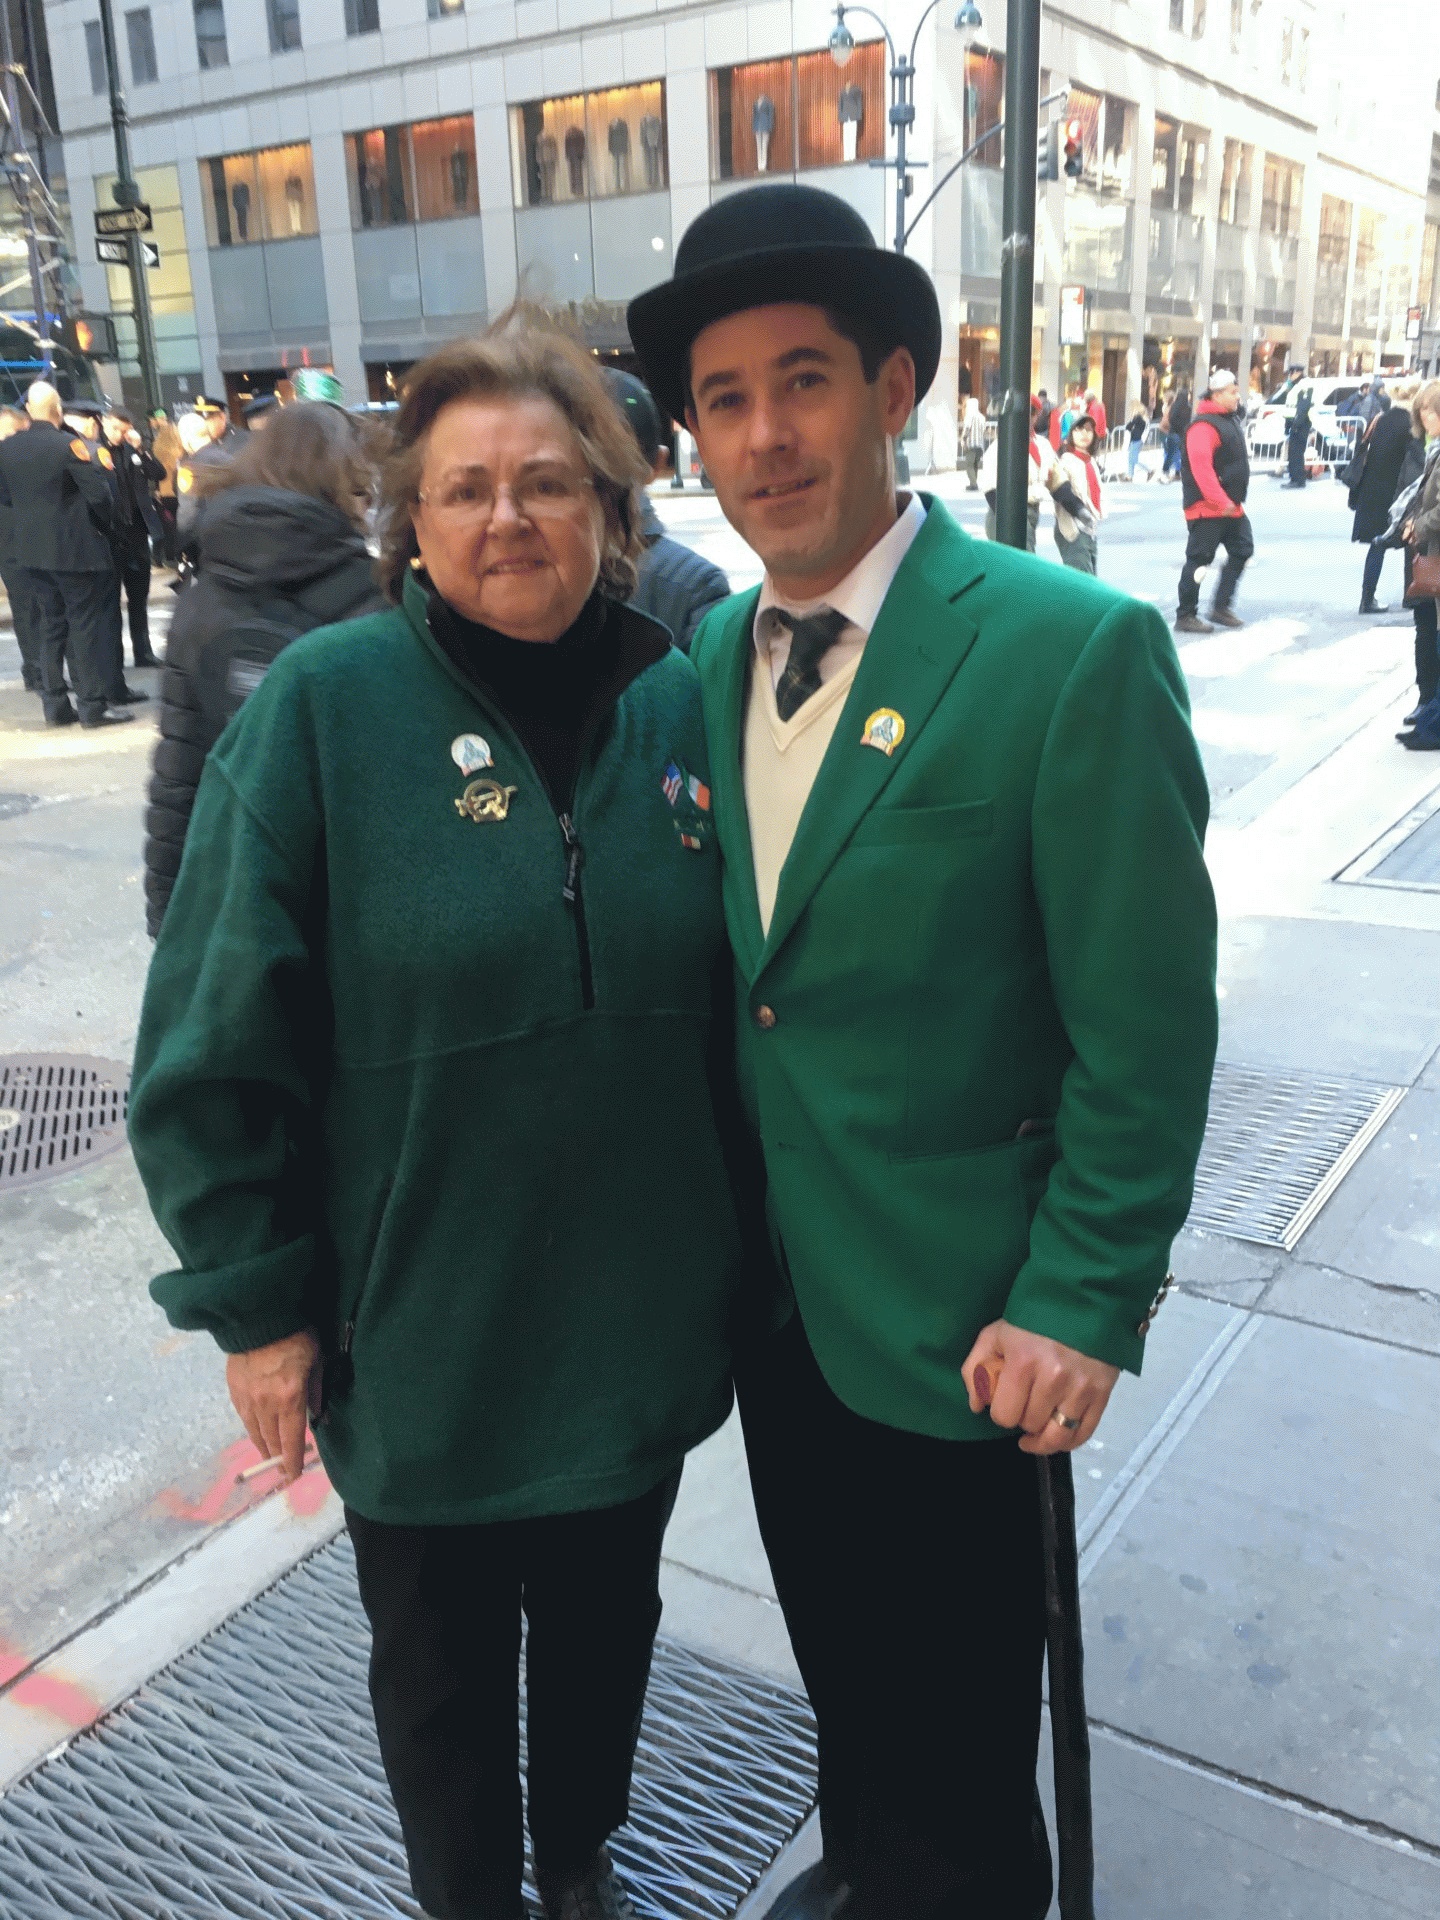 2018 GM Kathy Keller & club member Eoin McCann @ the NYC Parade